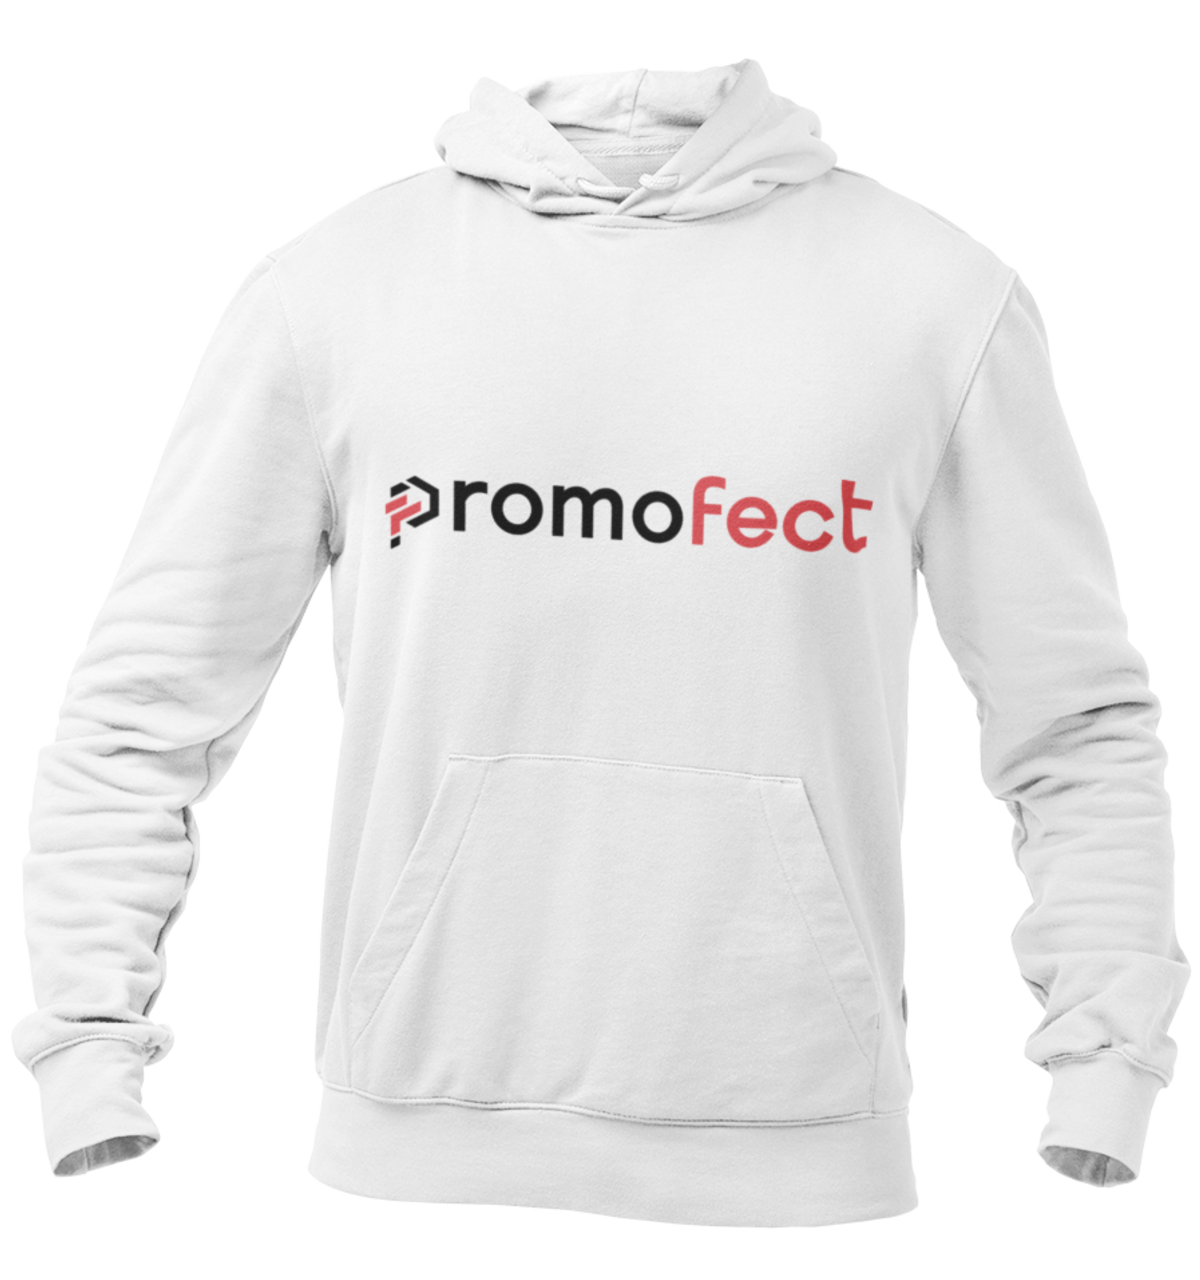 Promofect hoodie